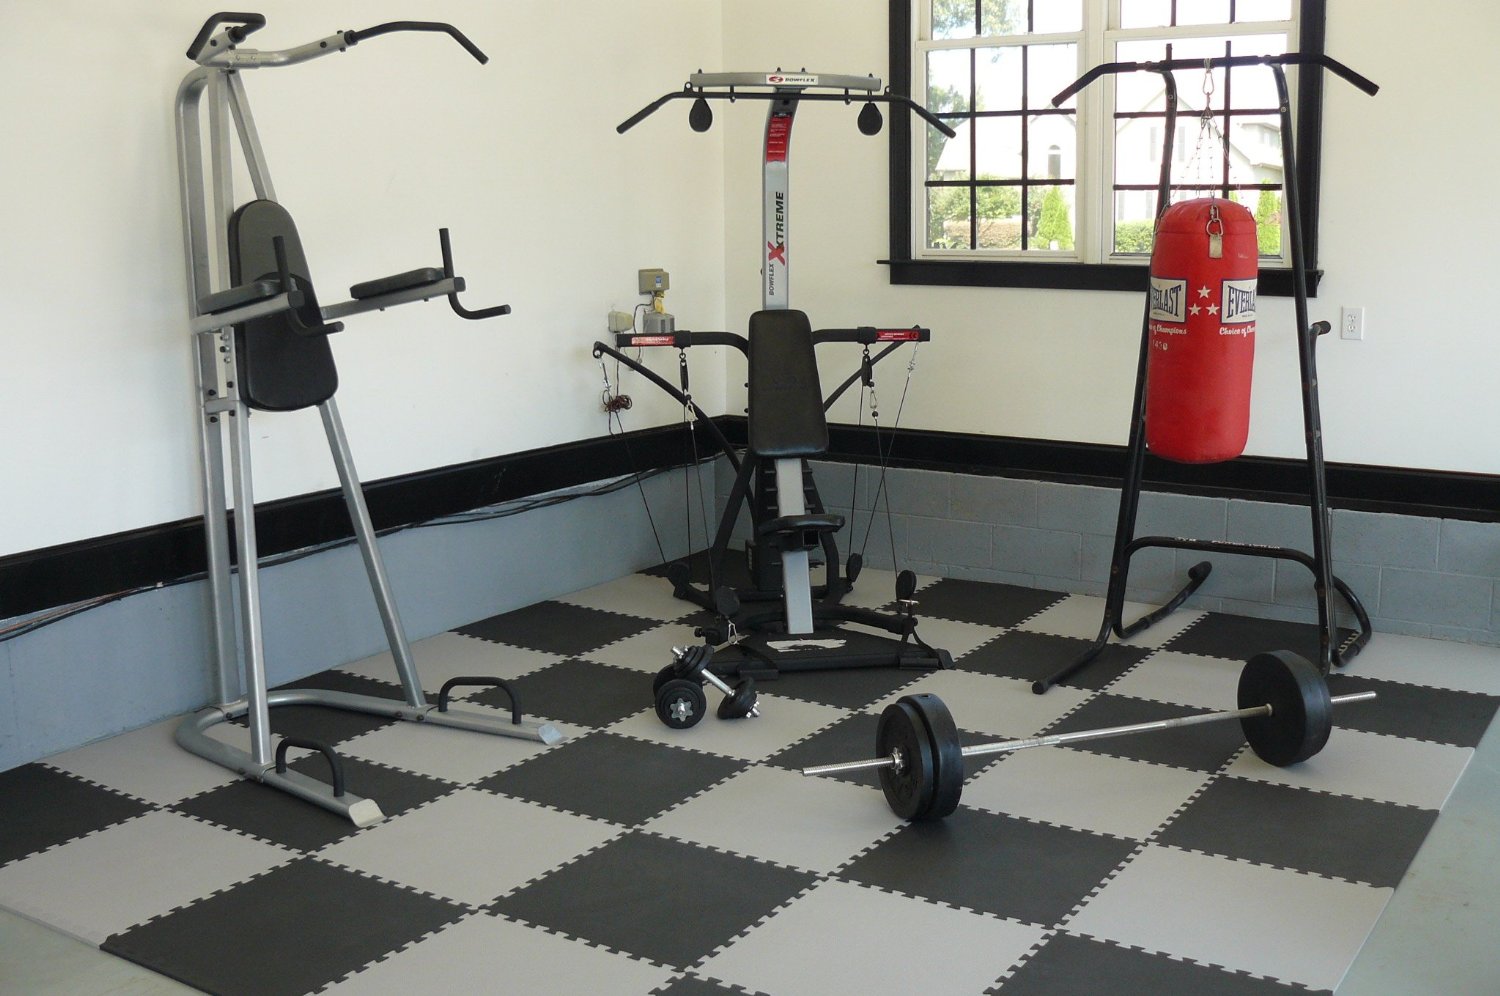 Rubber Garage Floor Mats - Interlocking Exercise Gym Flooring and Car Mats